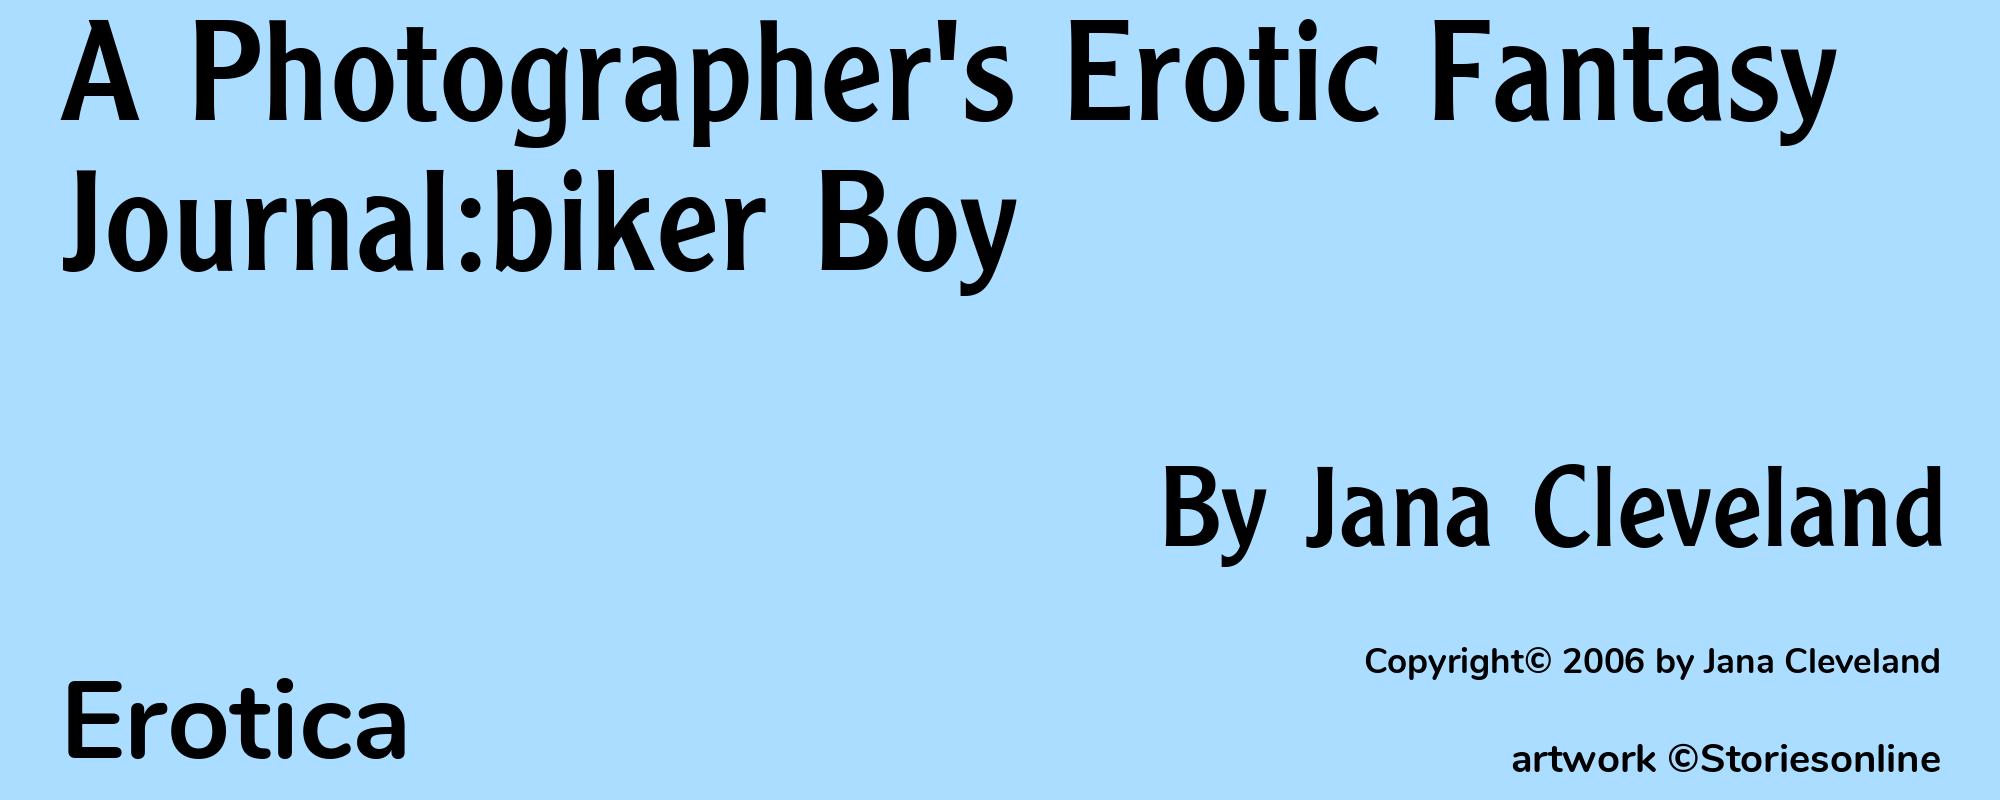 A Photographer's Erotic Fantasy Journal:biker Boy - Cover